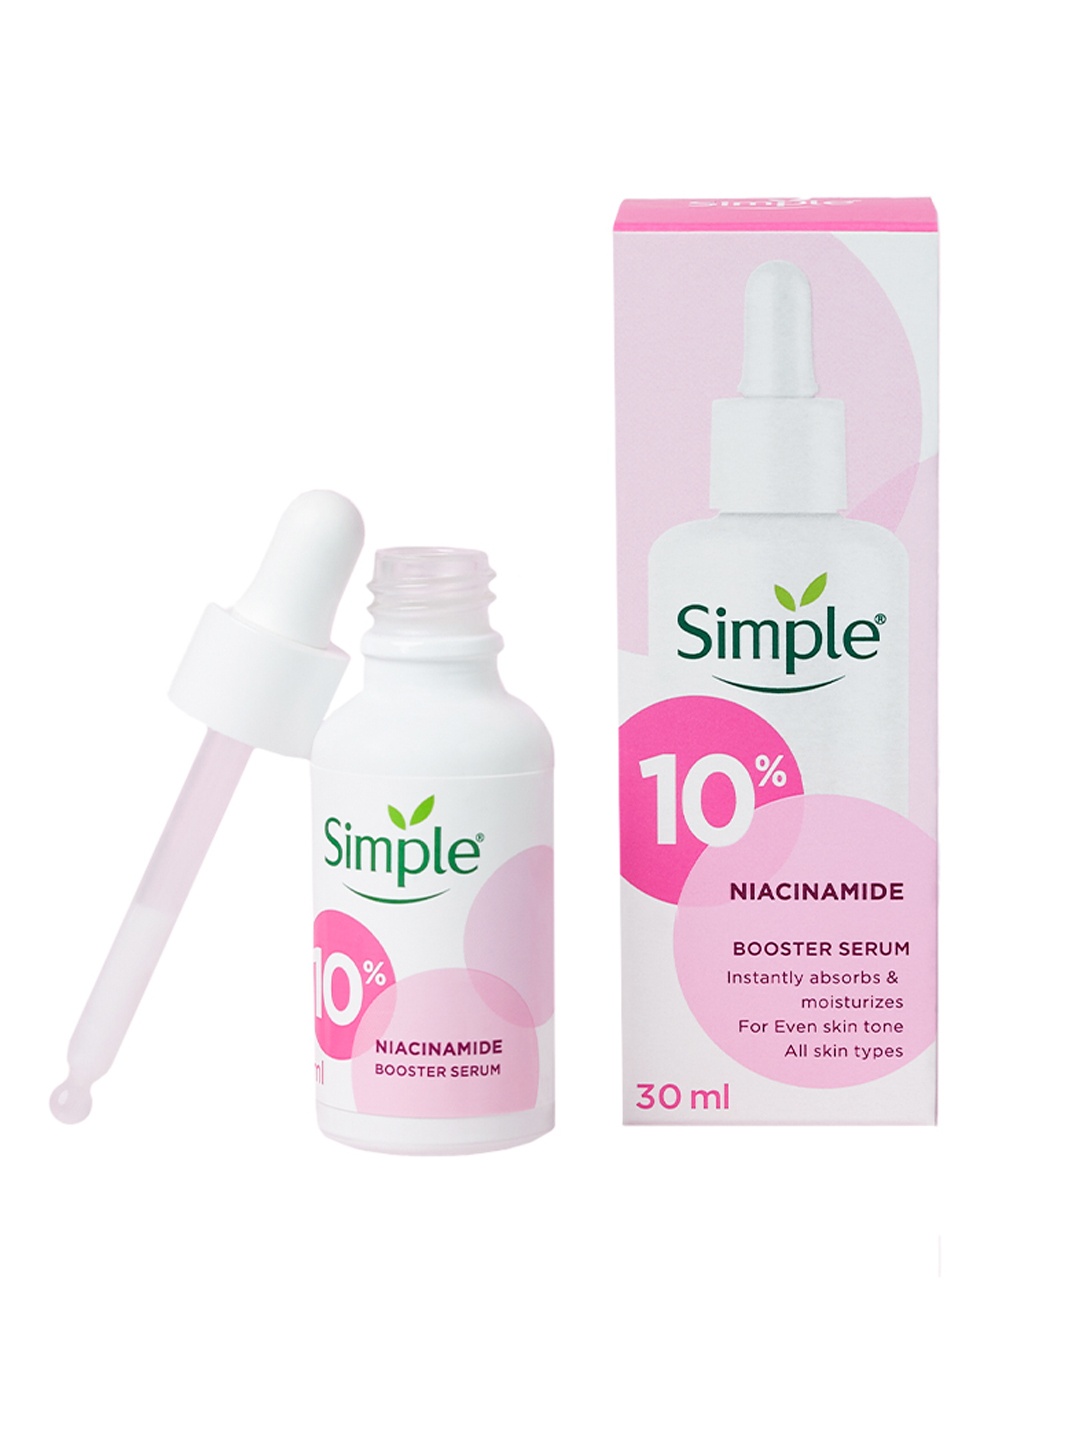 Flipkart - Simple Booster Serum 10% Niacinamide For Even Skin Tone 30 ml Price